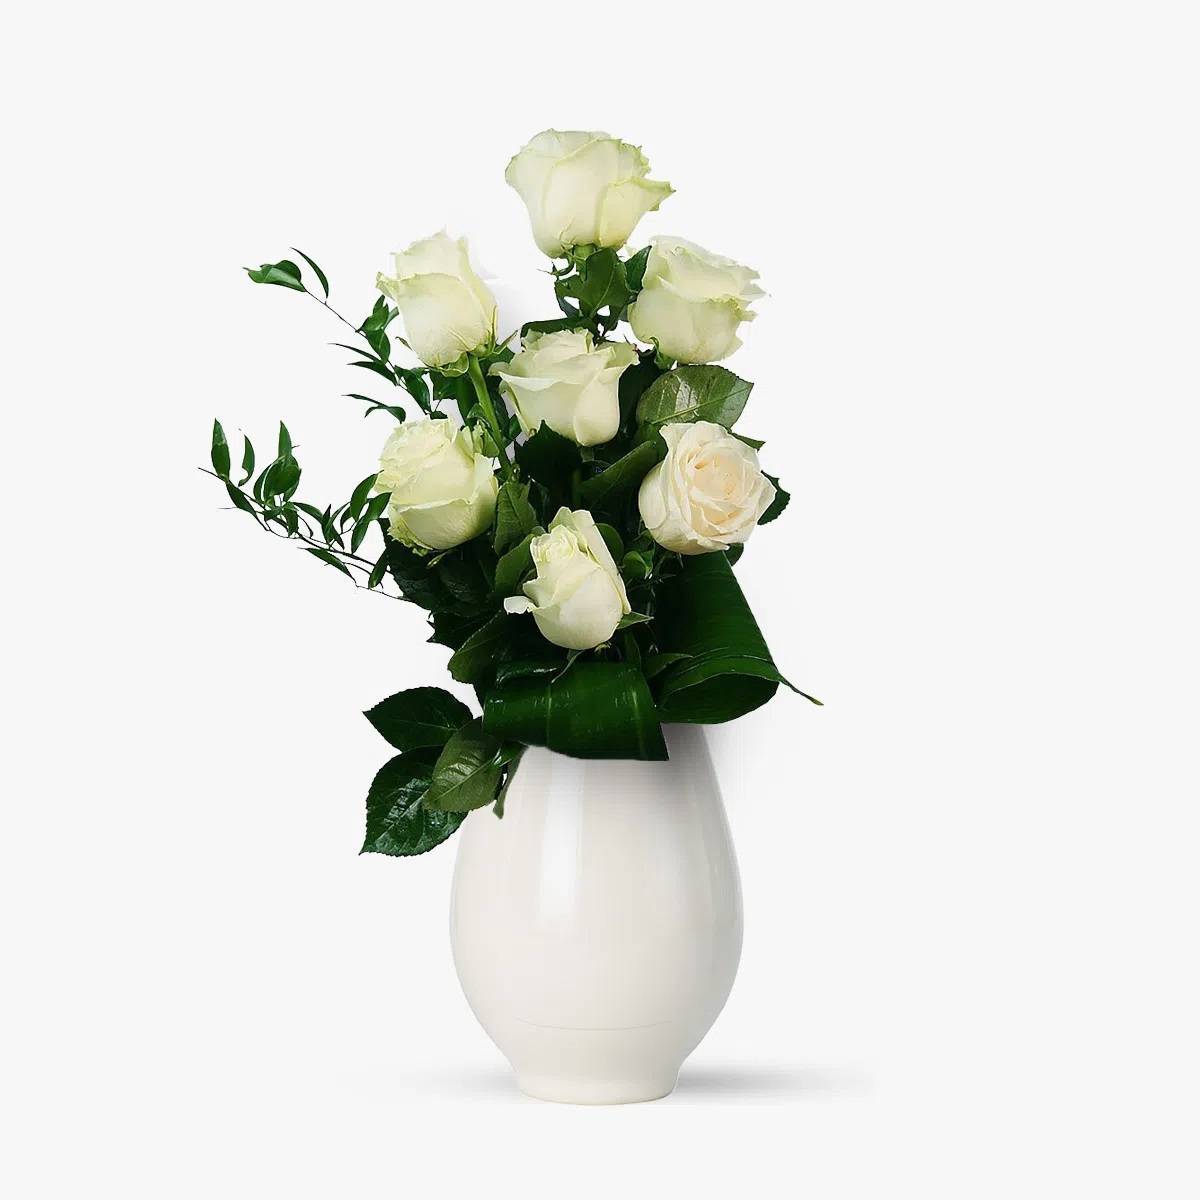 Cand este indicat sa achizitionezi un buchet de trandafiri albi?